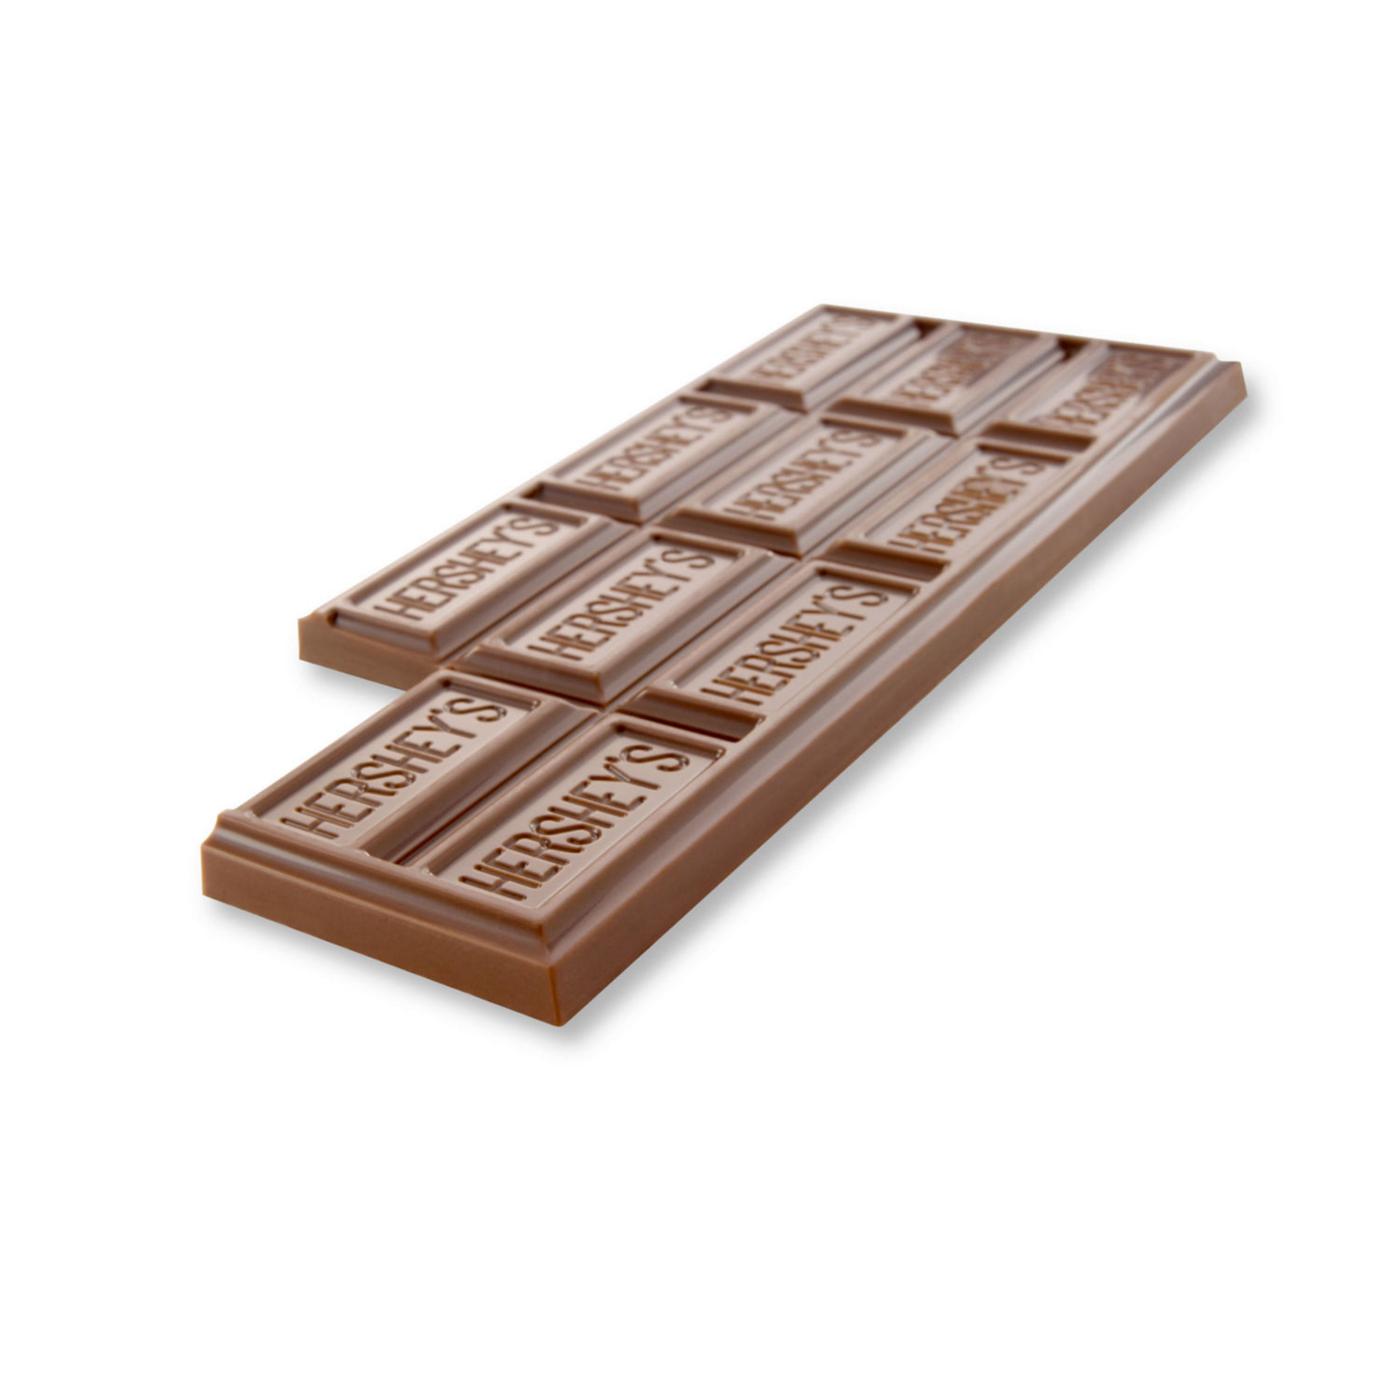 Hershey's Milk Chocolate Candy Bars; image 6 of 7